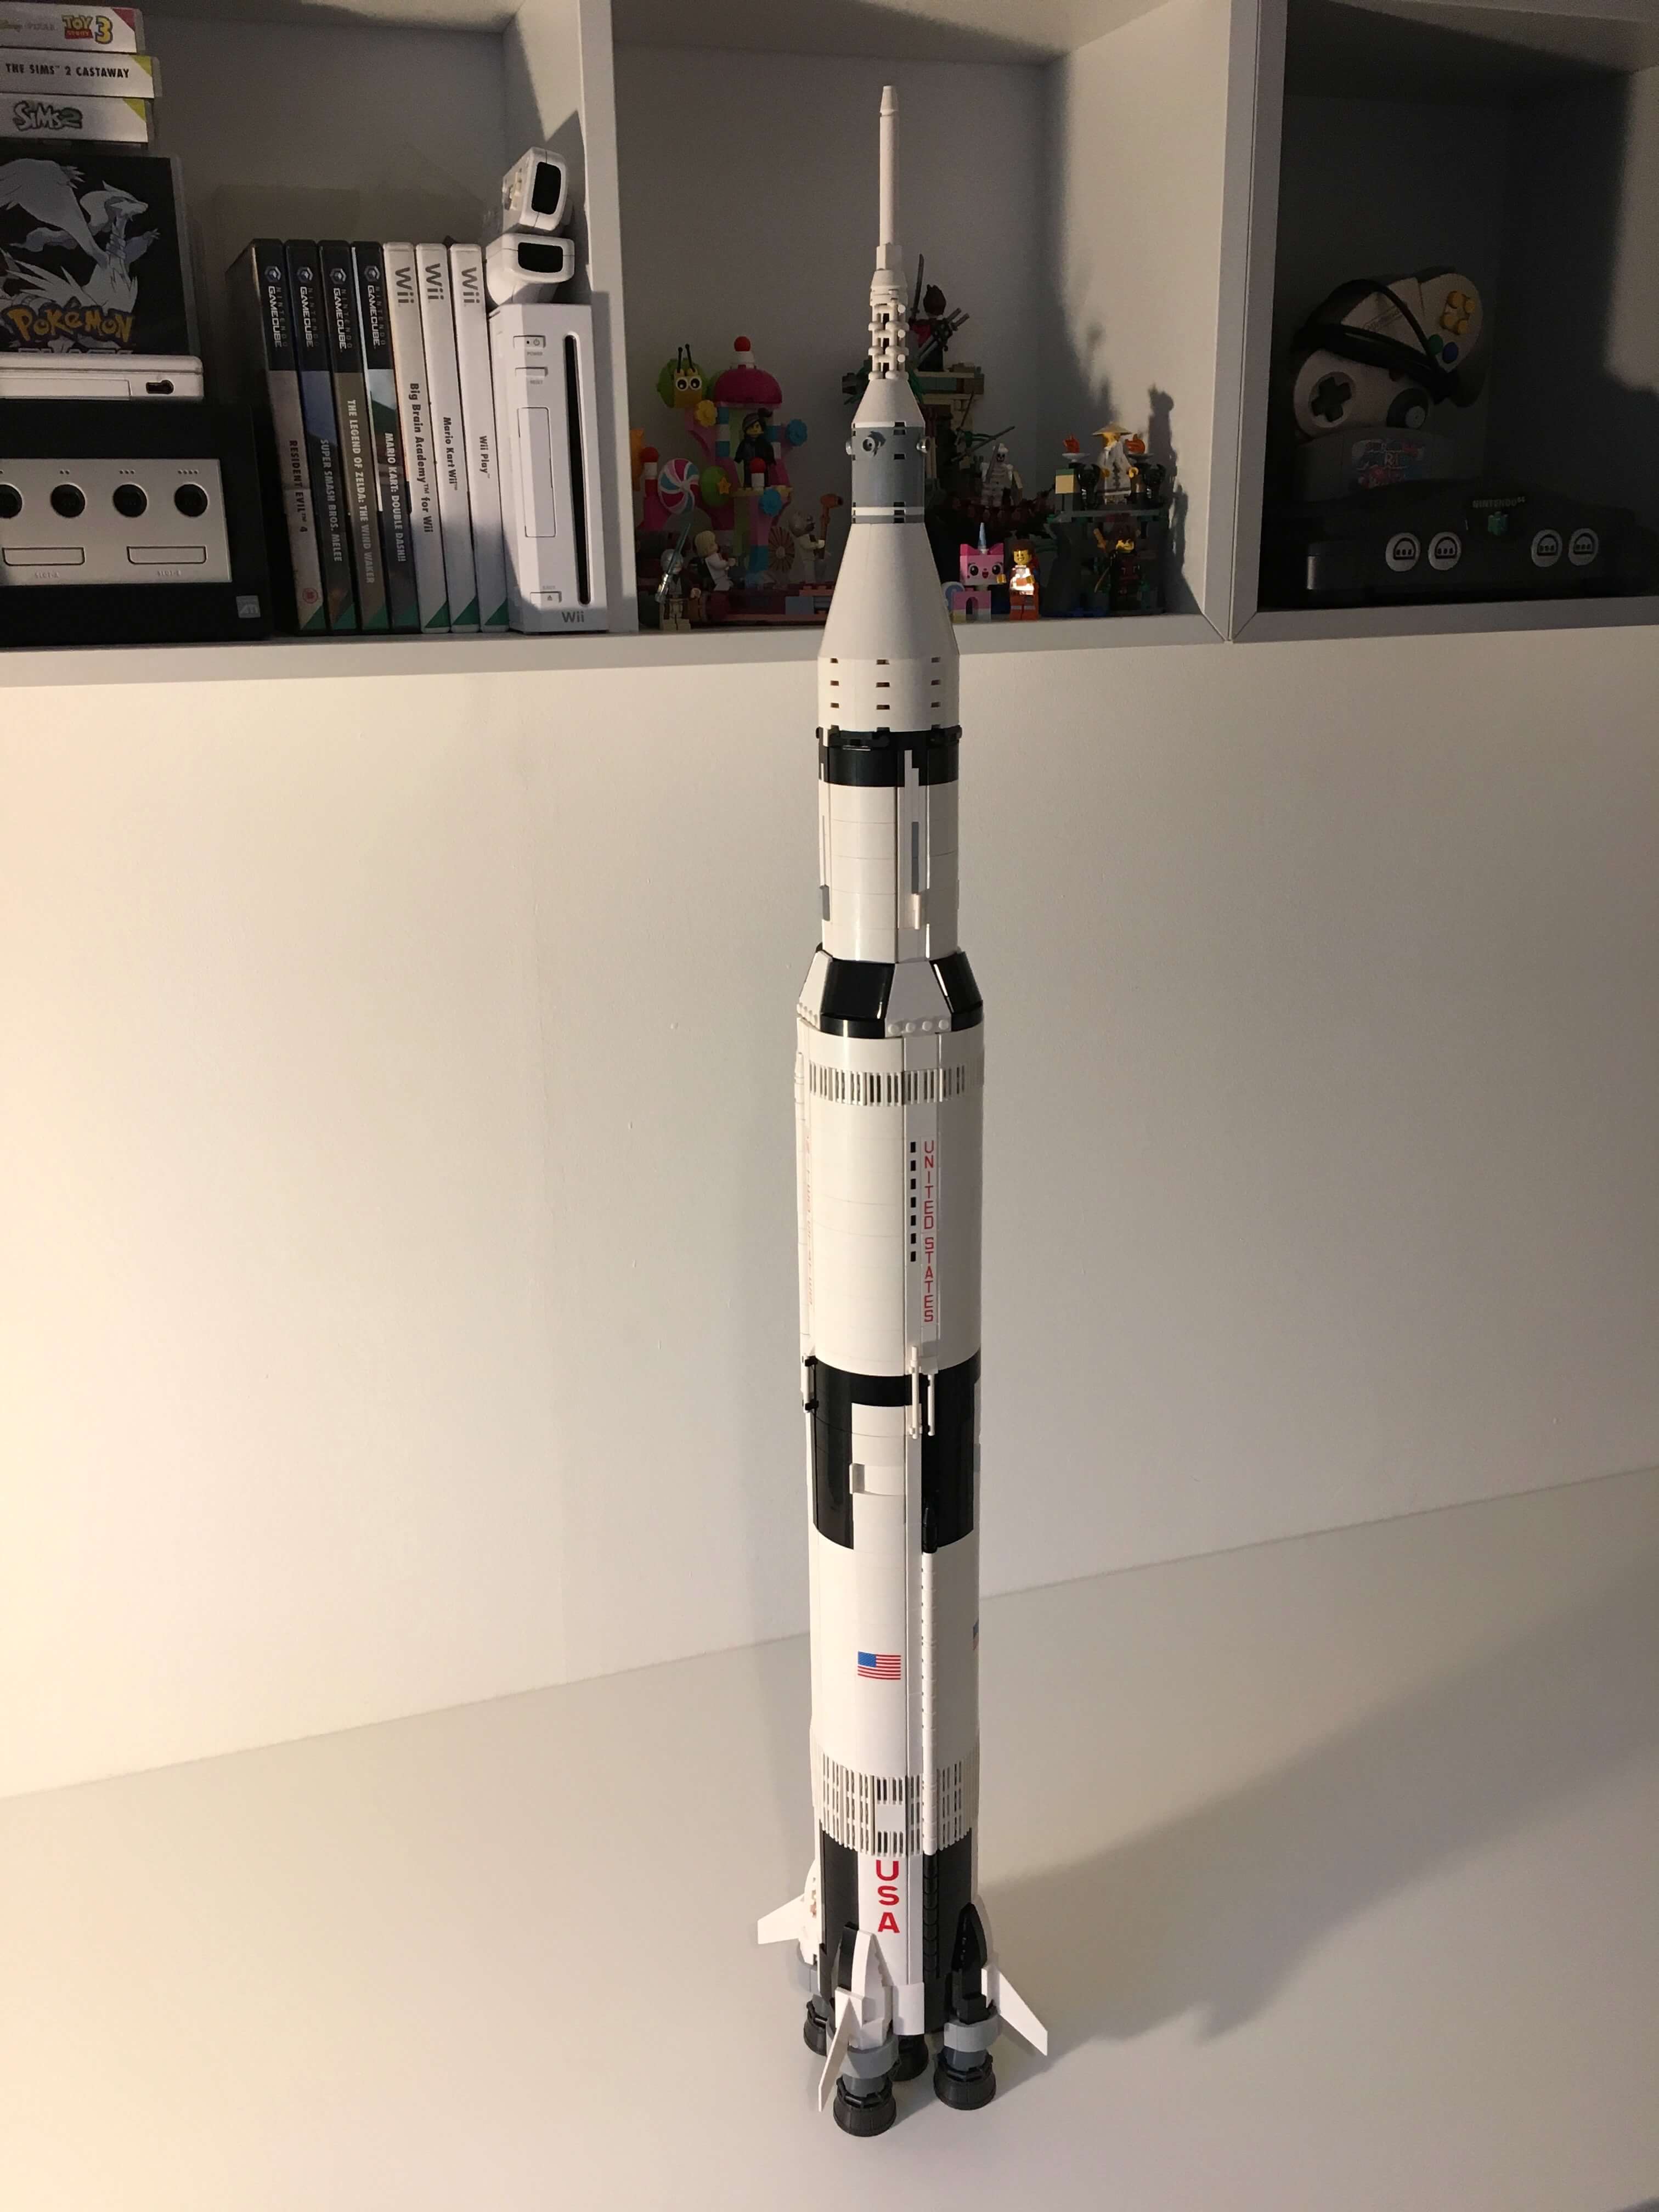 Lego Saturn V built